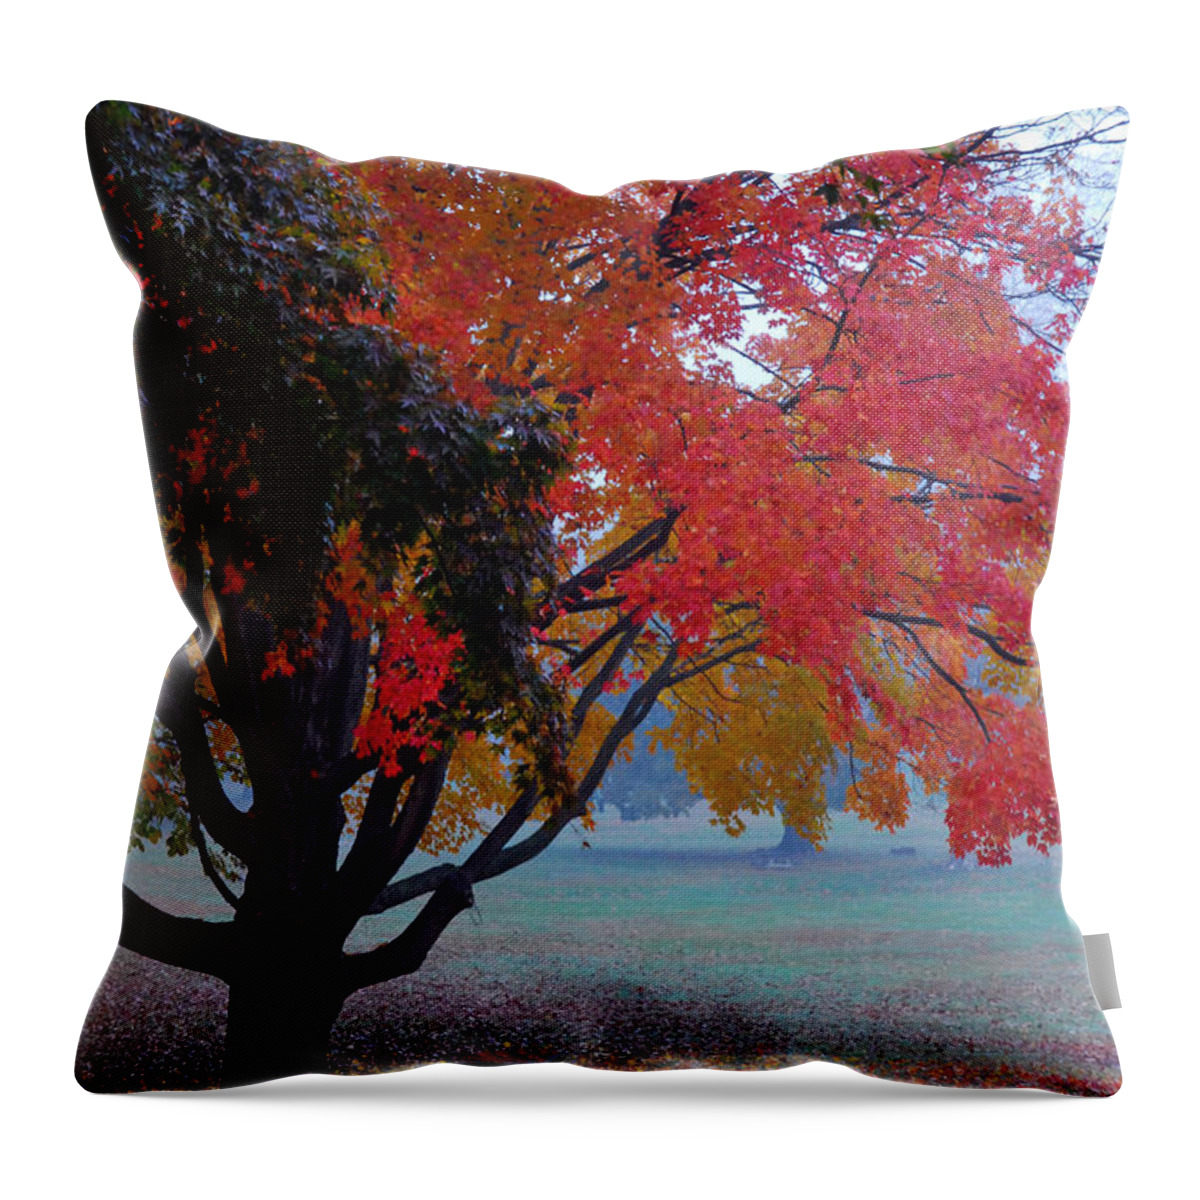 Autumn Splendor Throw Pillow featuring the photograph Autumn Splendor by Lisa Phillips